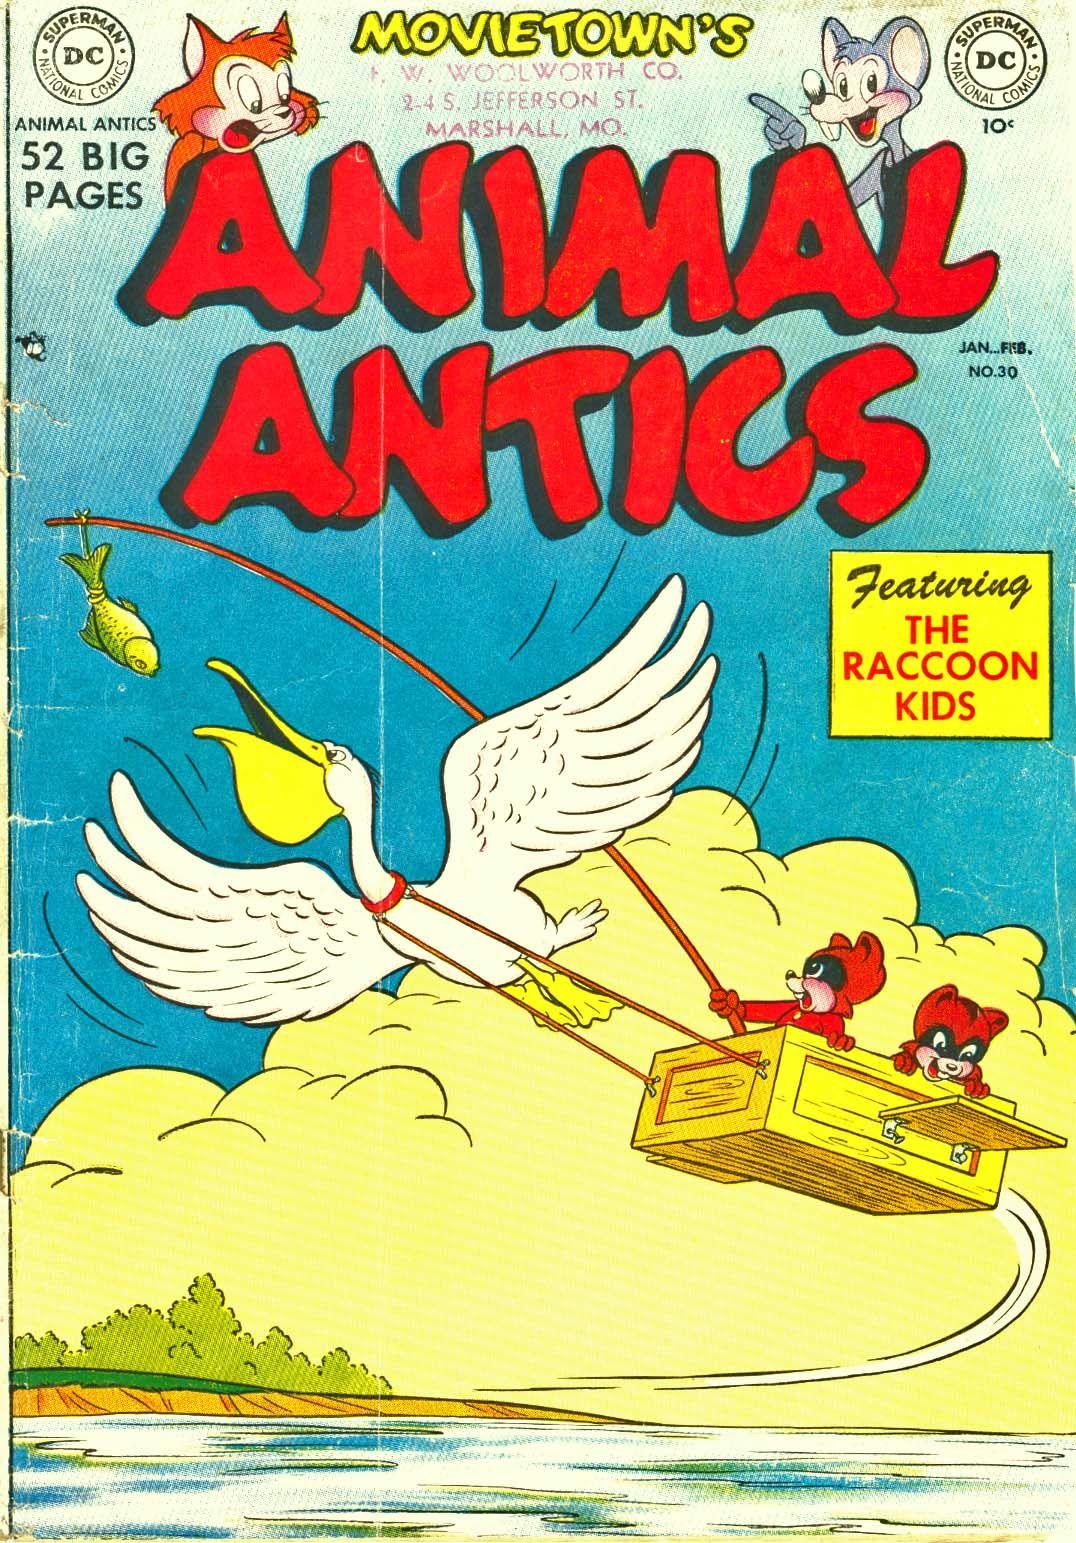 Movietown's Animal Antics Vol. 1 #30